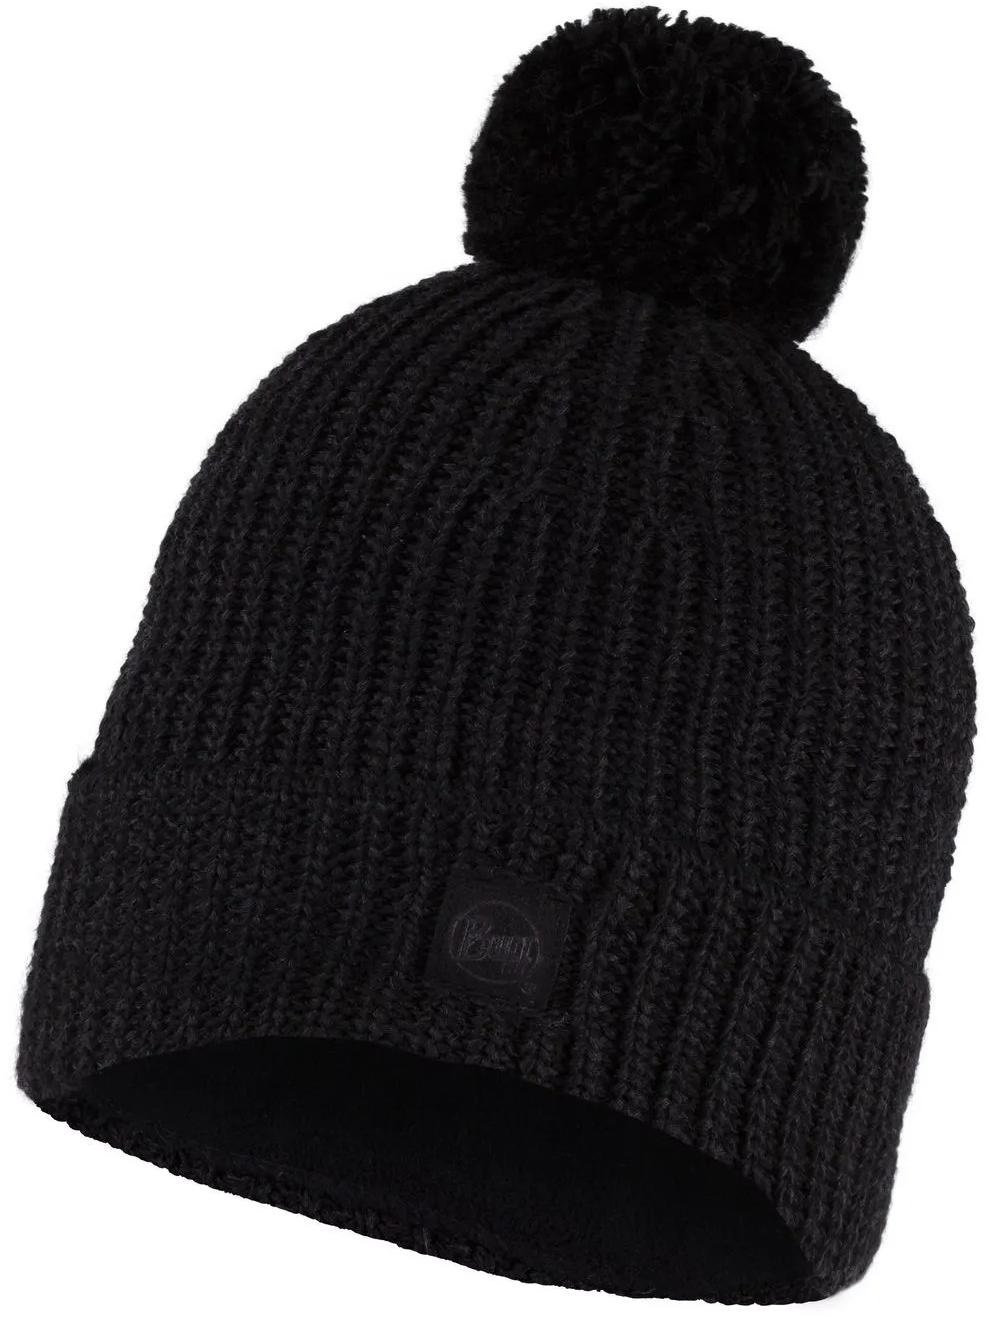 Шапка Buff Knitted & Fleece Band Hat Vaed Black, US:one size, 129619.999.10.00 шапка buff knitted